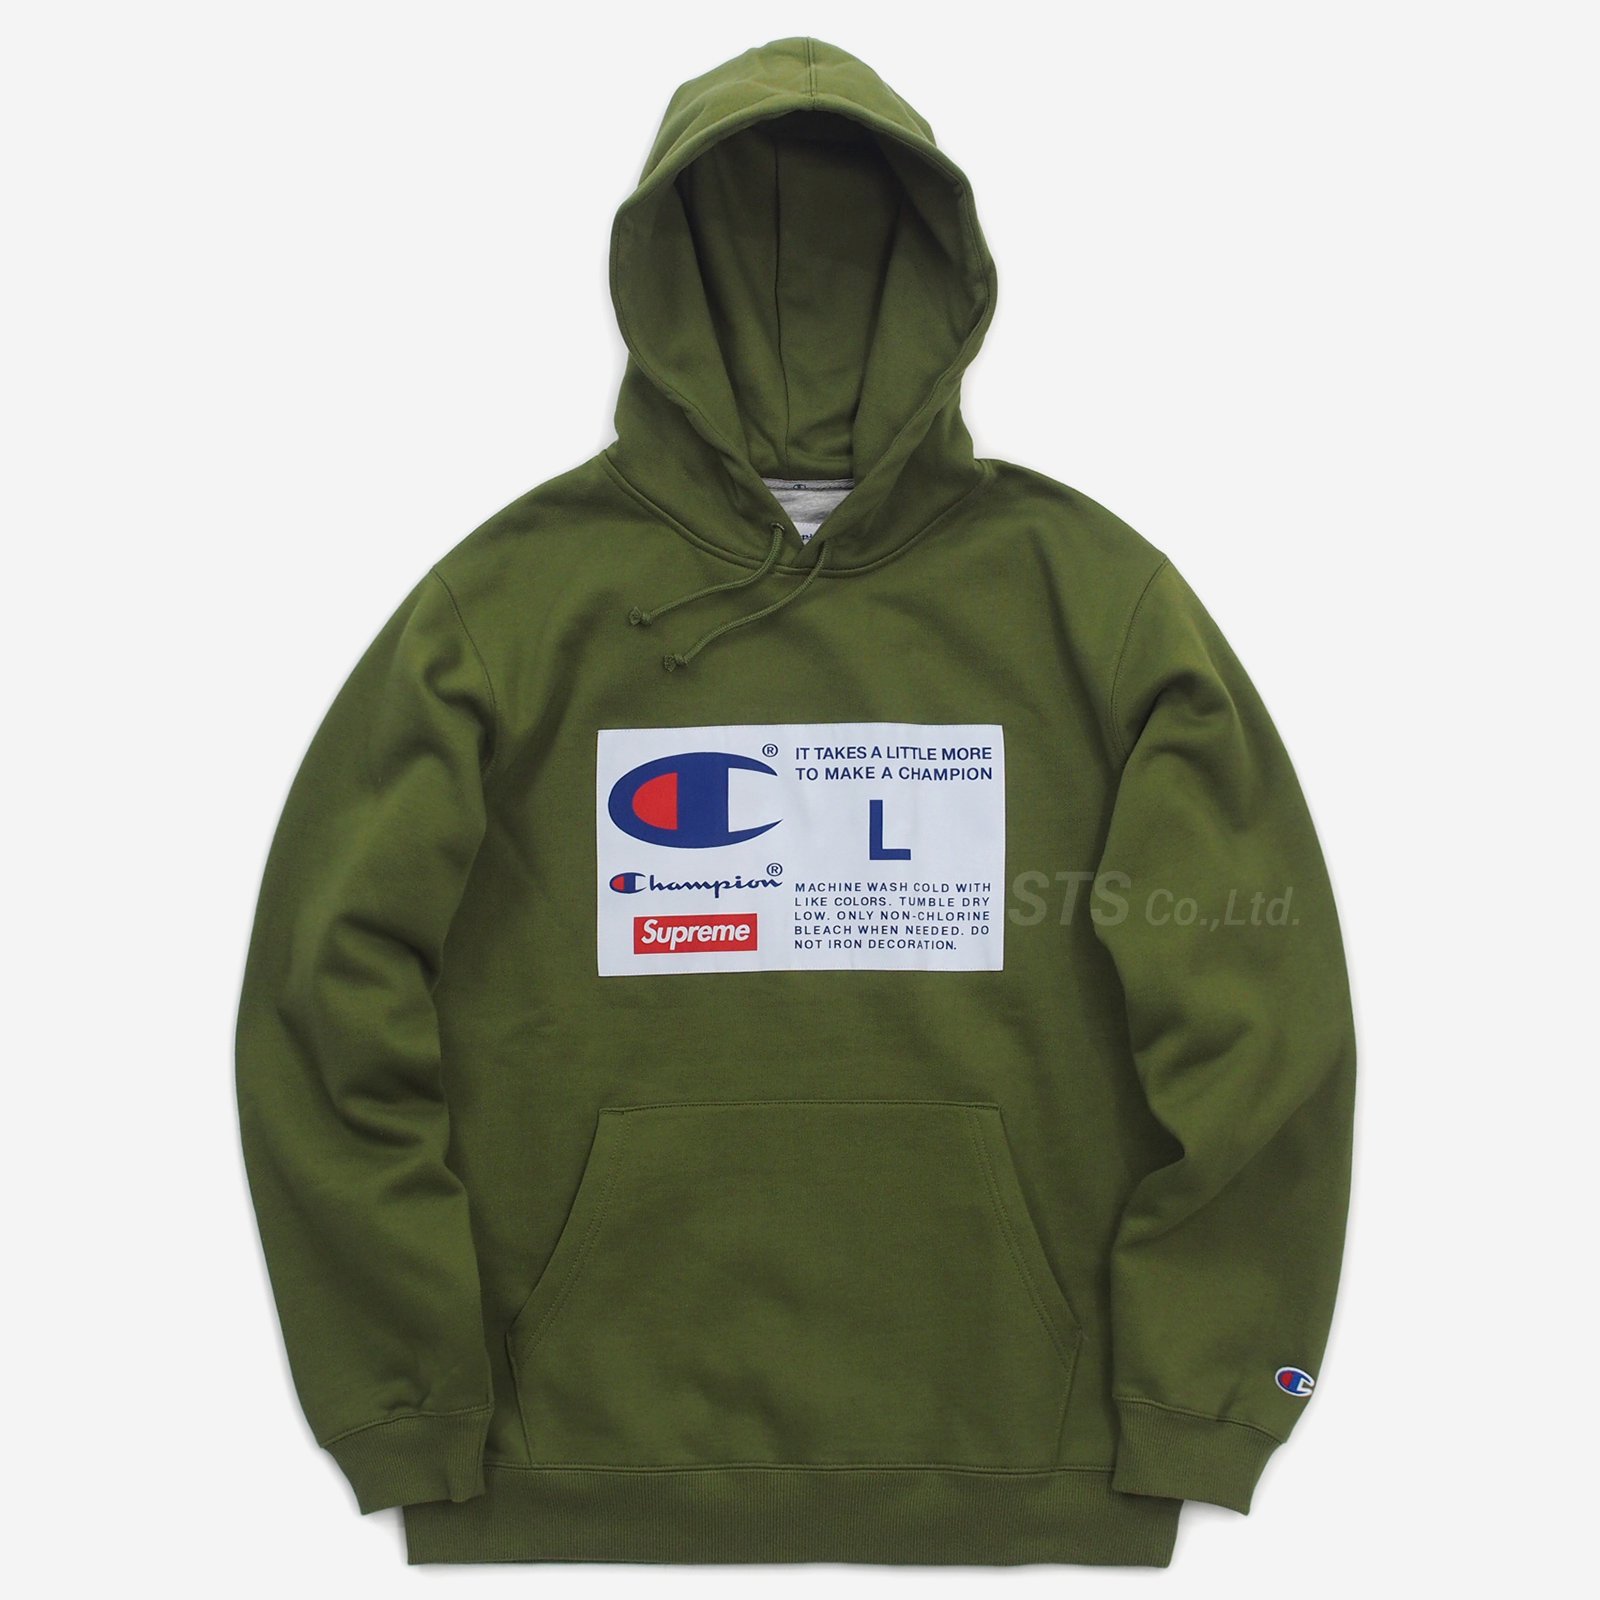 Supreme/Champion Label Hooded Sweatshirt